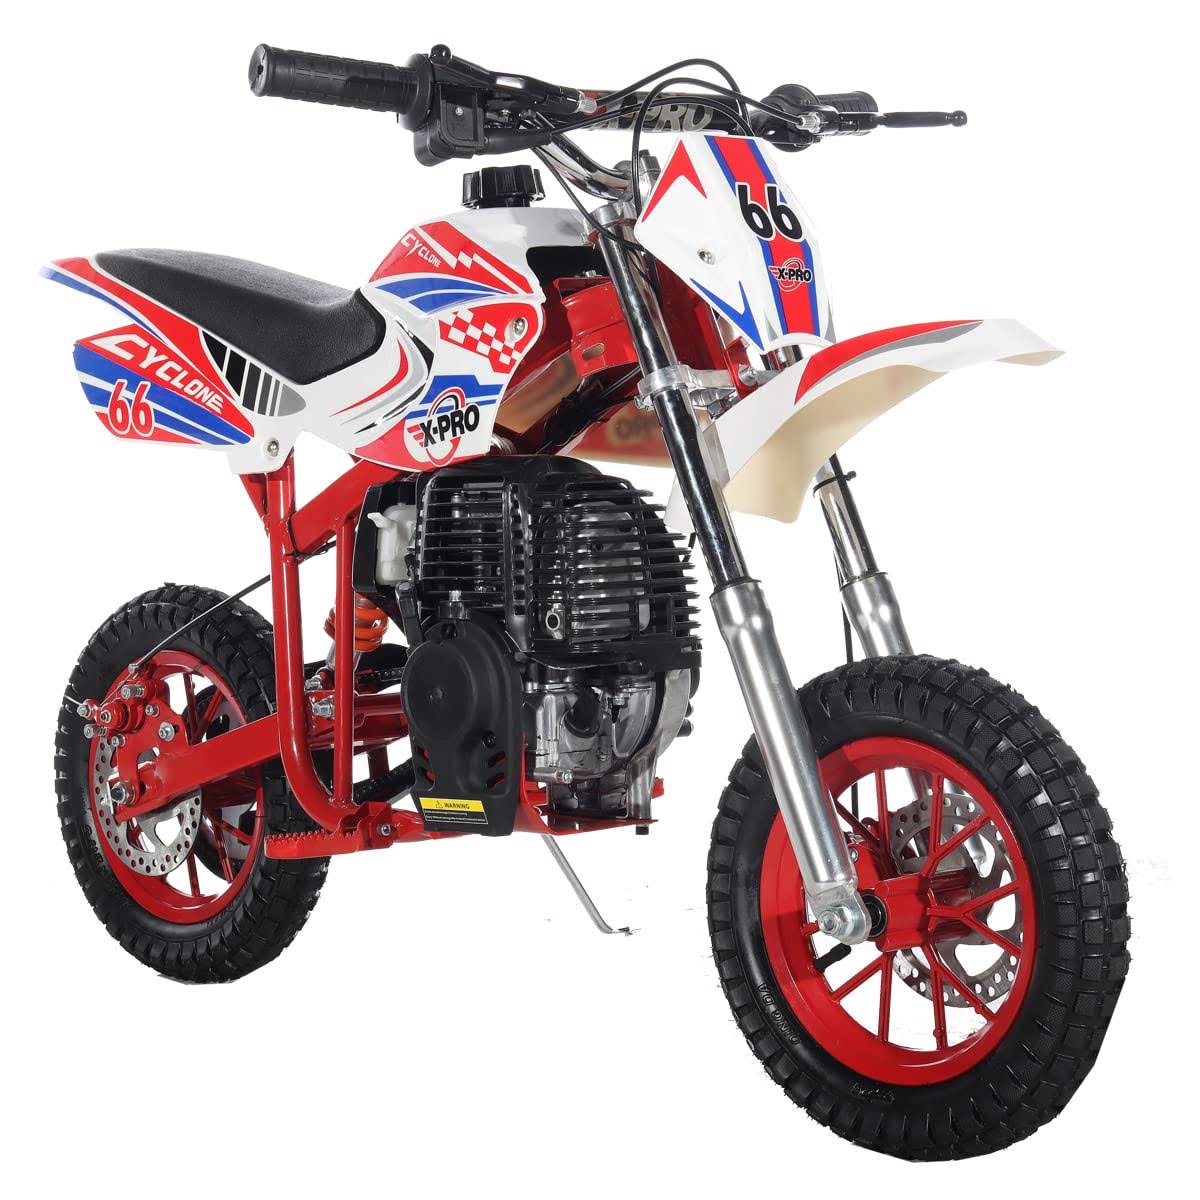 X-Pro 40cc Kids Dirt Bike Mini Pit Bike Dirt Bikes Motorcycle GAS Power Bike Off Road,Red